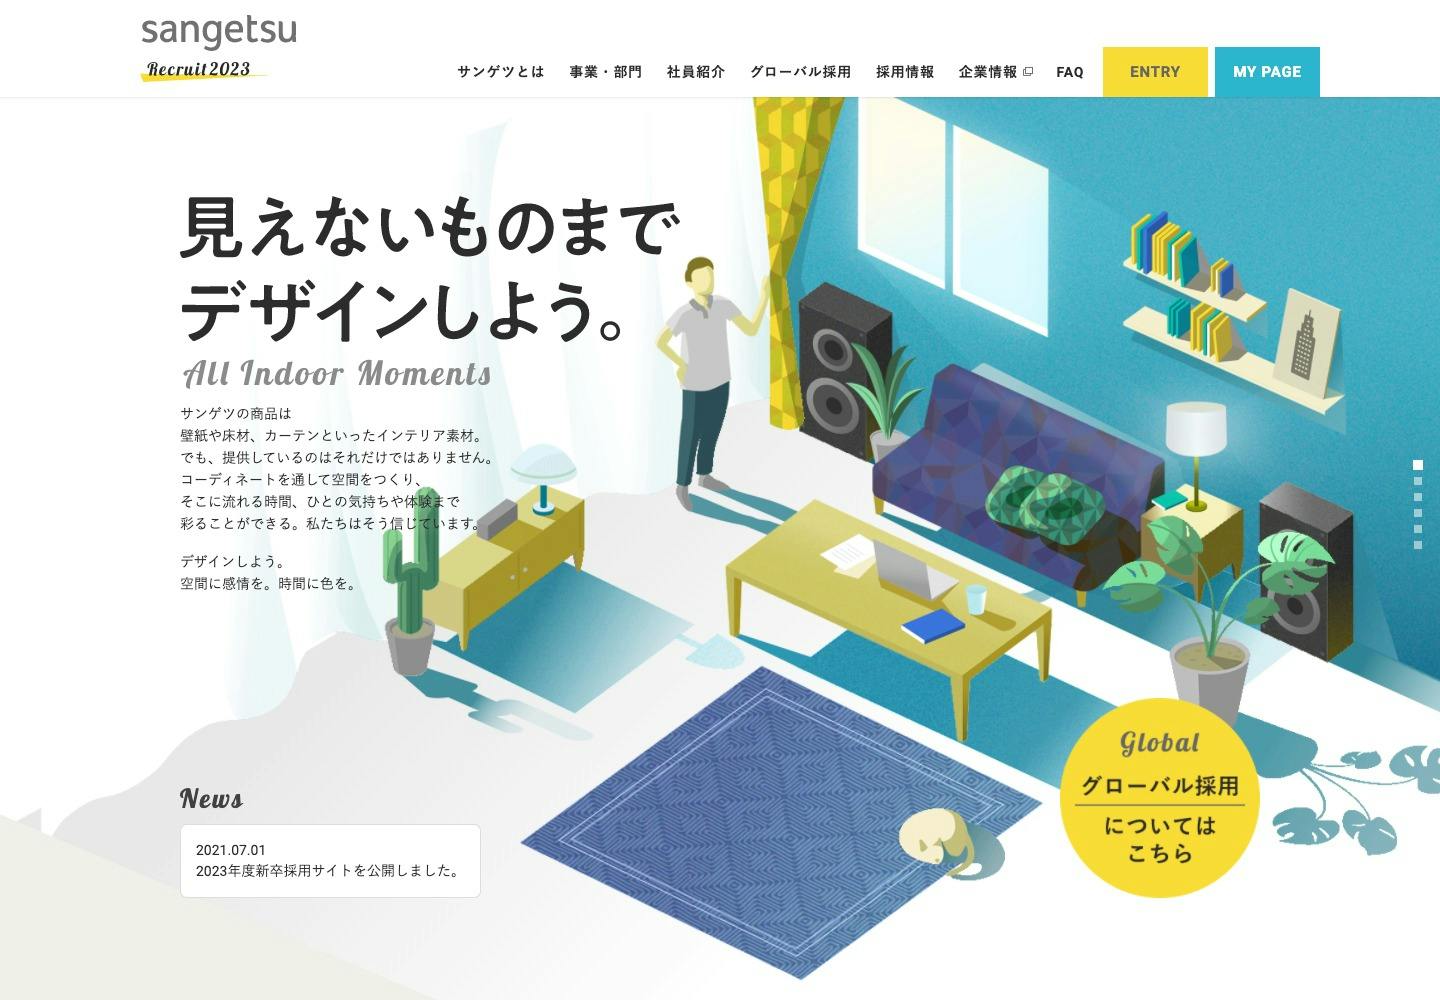 Cover Image for SANGETSU Recruit 2023 | 株式会社サンゲツ新卒採用情報